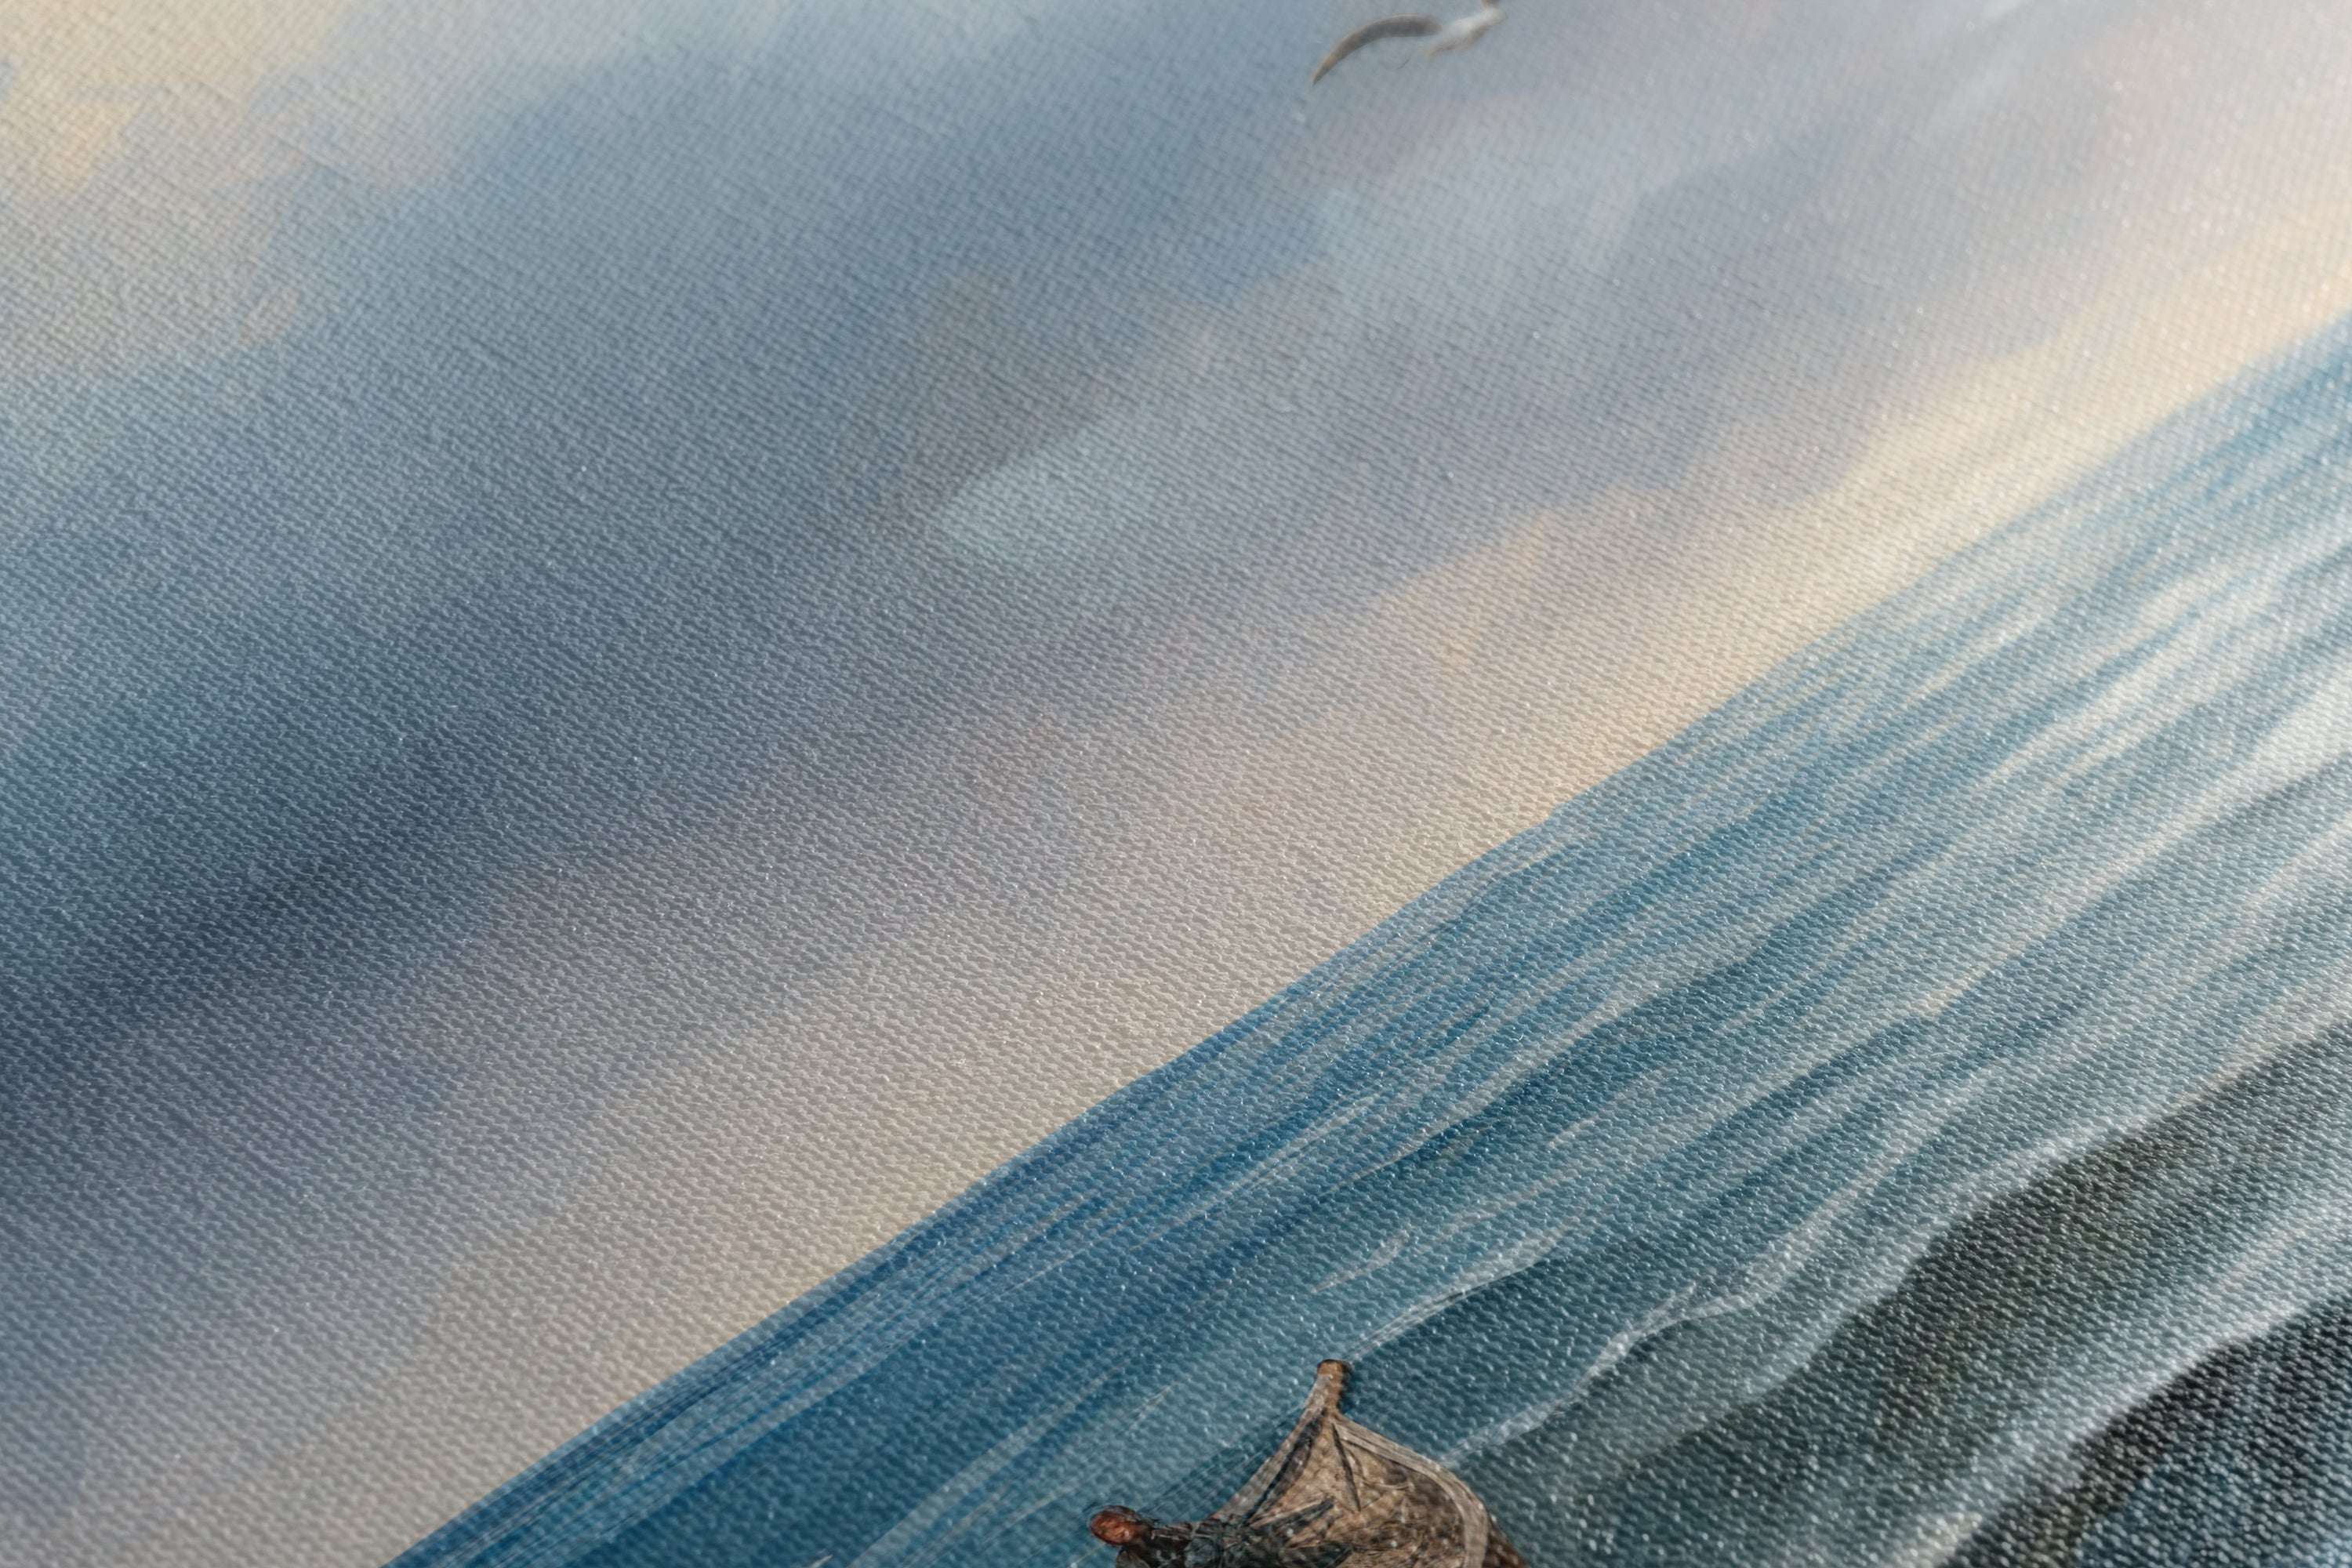 Boat Journeying under a Grey Sky - Canvas Print - Artoholica Ready to Hang Canvas Print